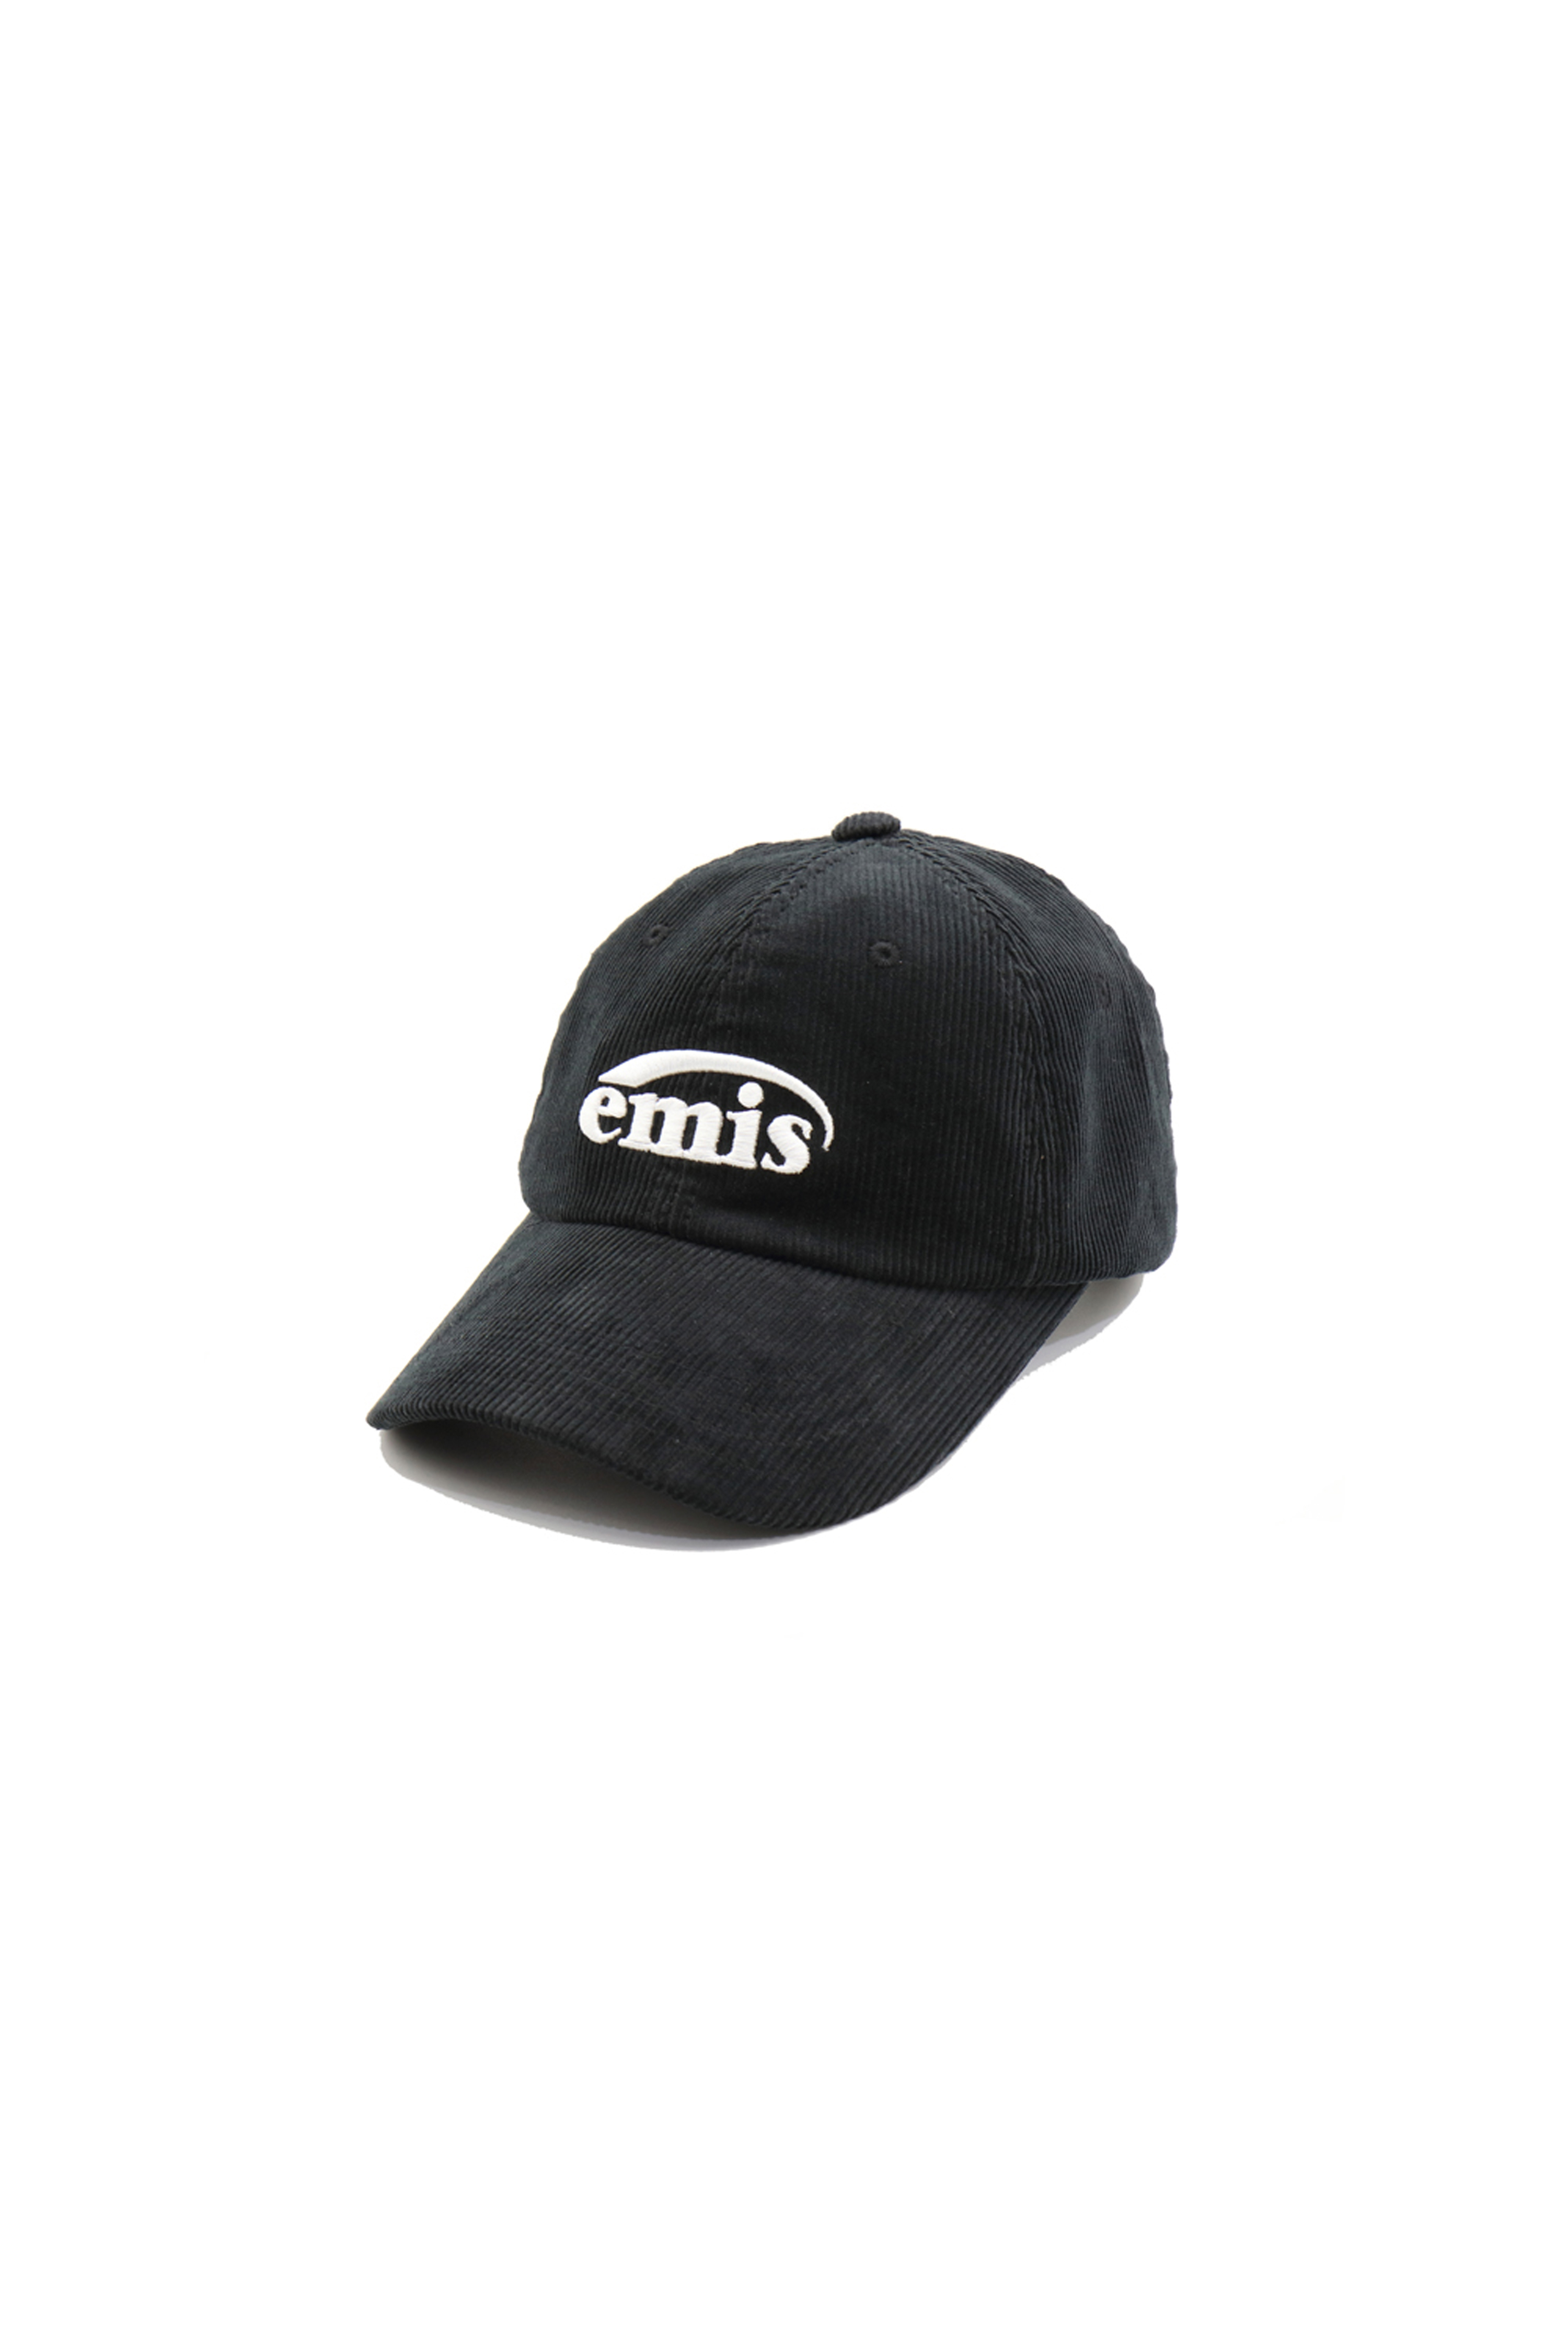 NEW LOGO CORDUROY EMIS CAP-BLACK